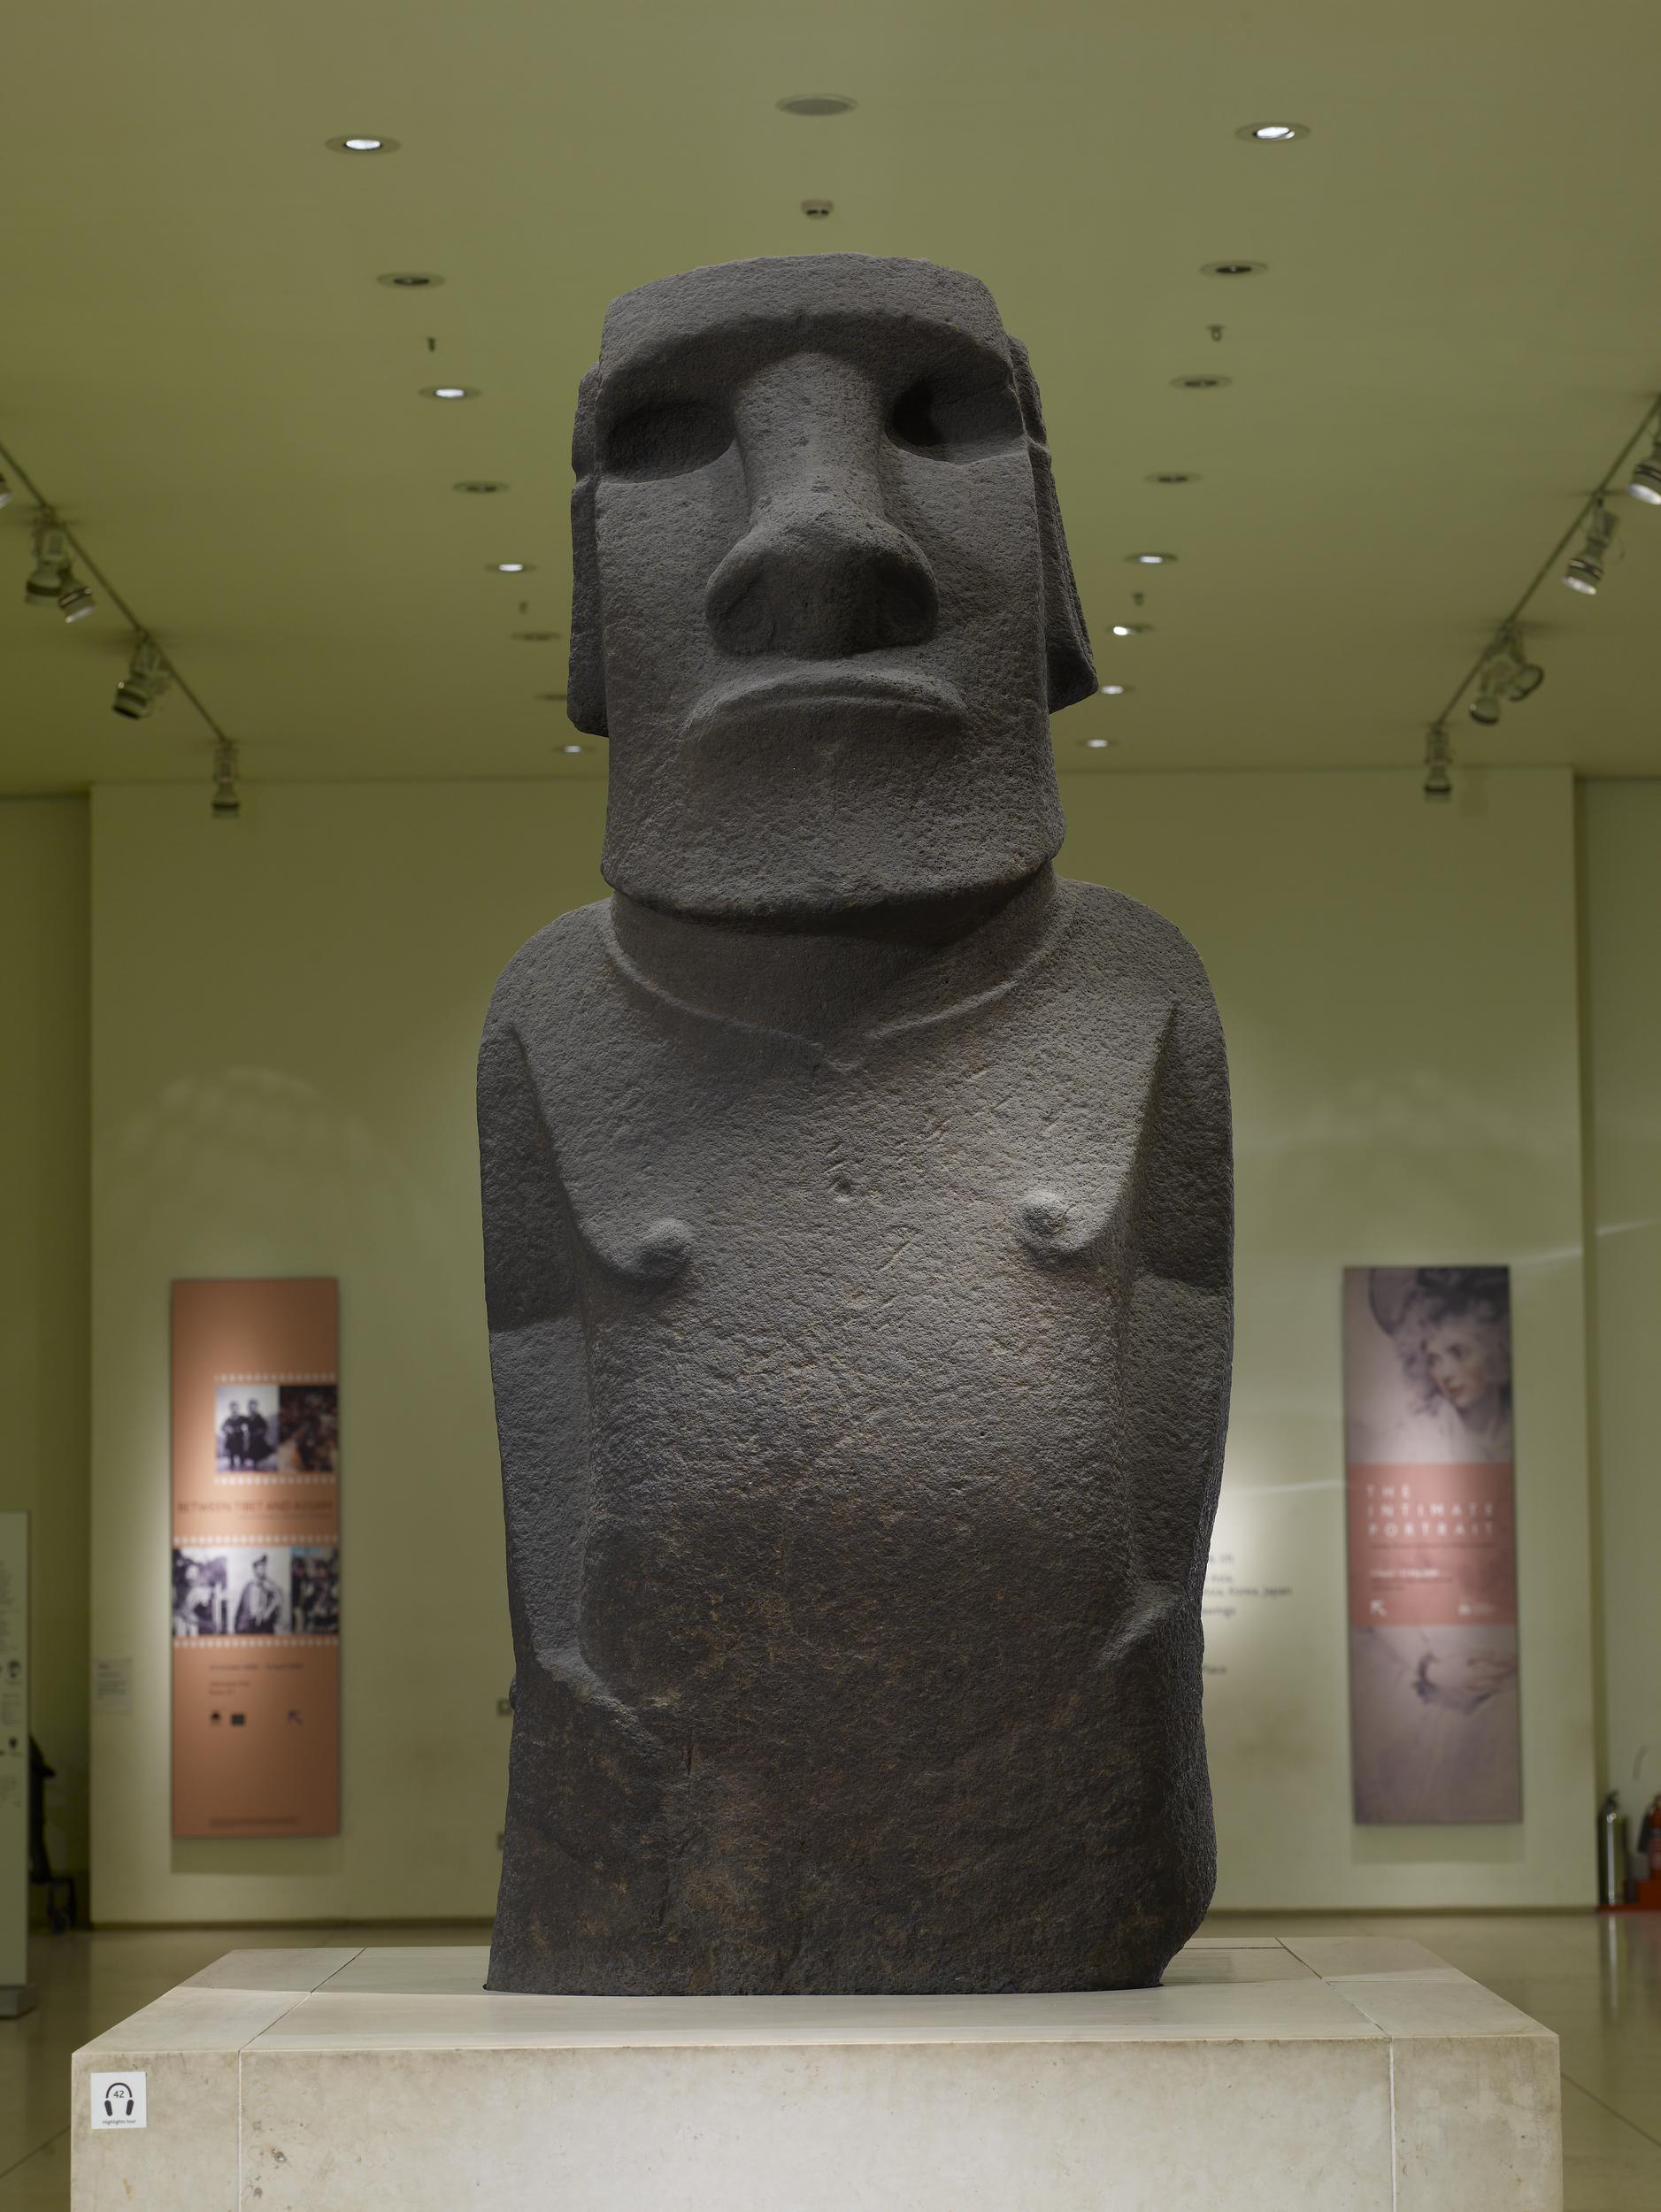 Here's Why Everyone Is Using The Stone Man (Moai) Emoji